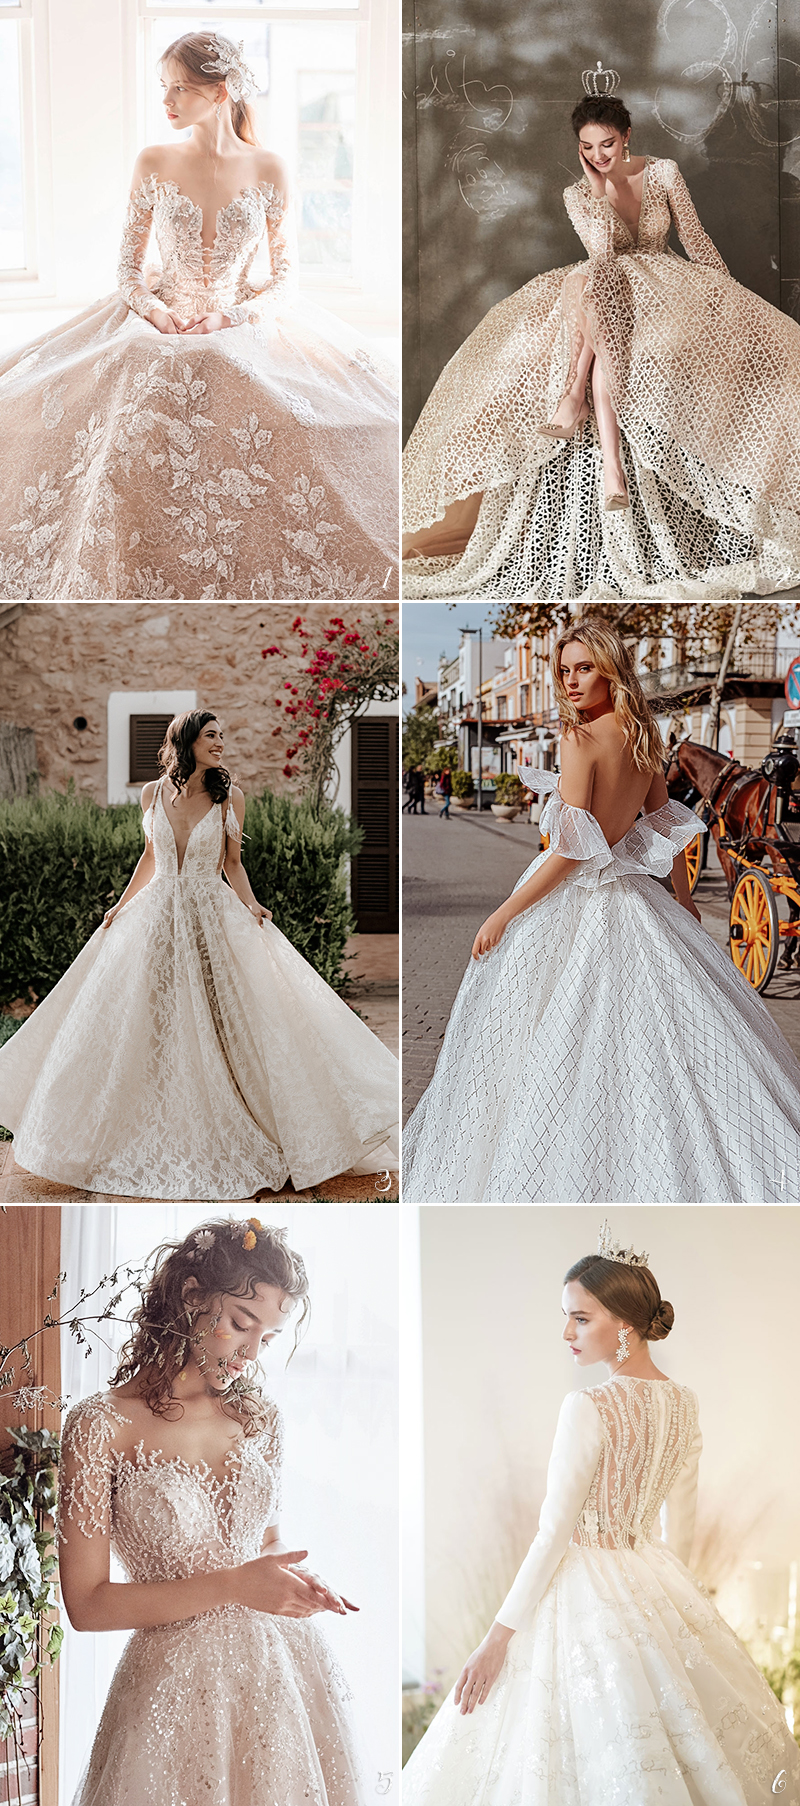 ball gown wedding dresses